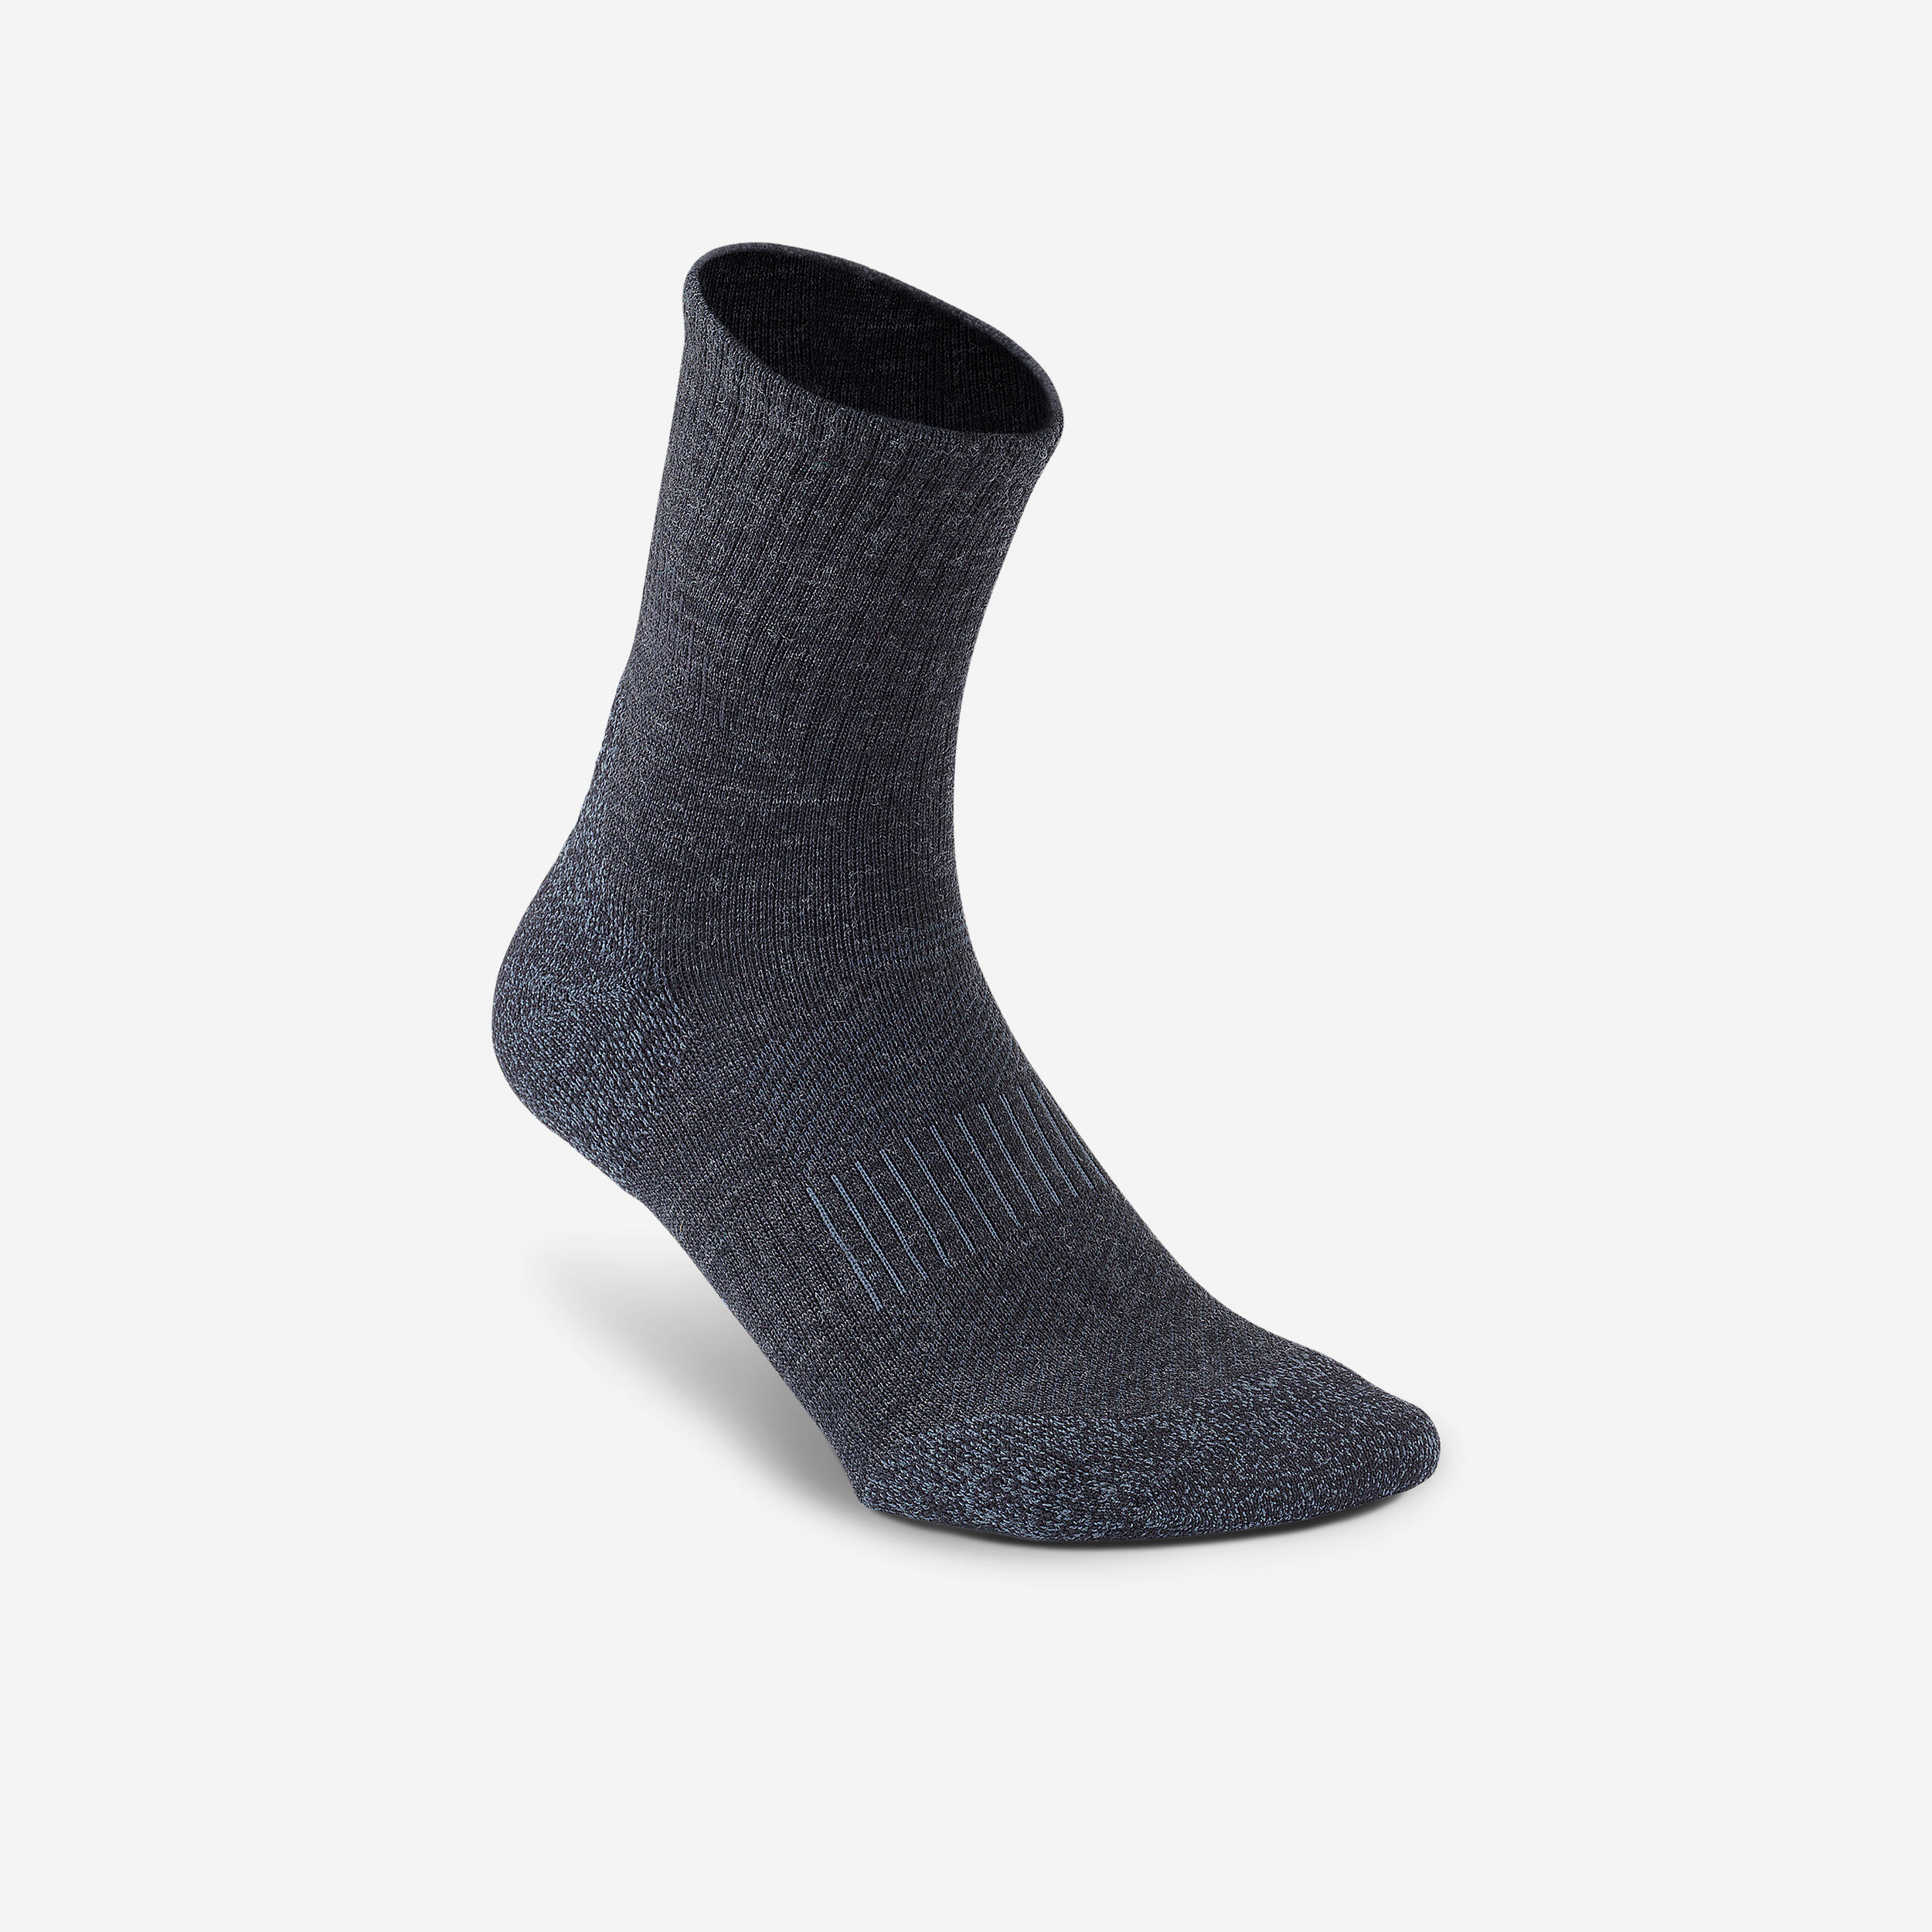 NEWFEEL WS 580 Warm Fitness/Nordic walking Socks - Black